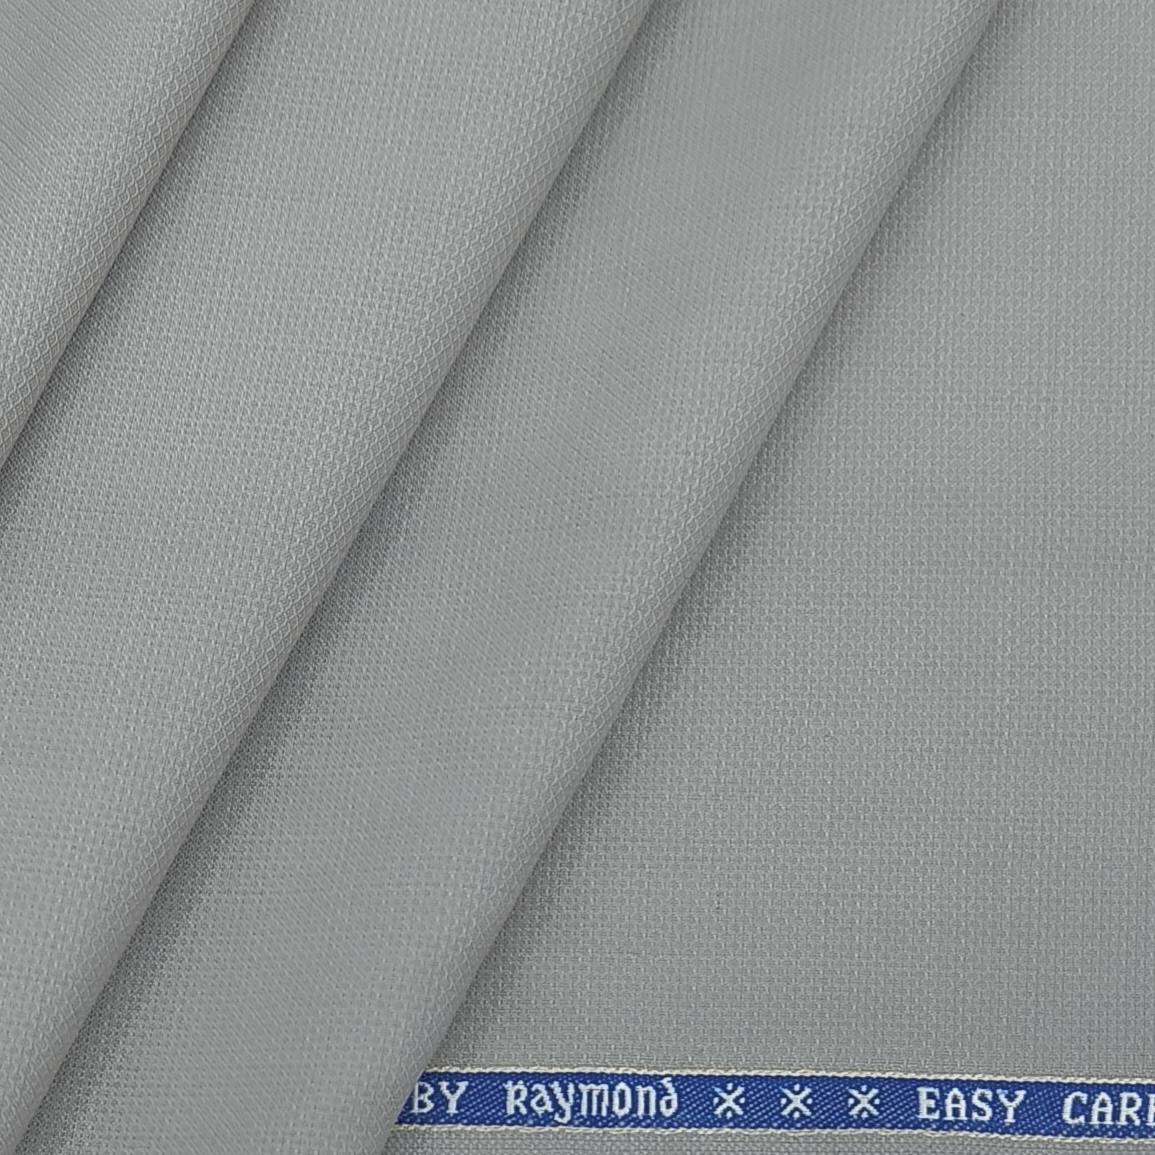 Raymond 40%Terrywool Light Green Dobby trouser fabric